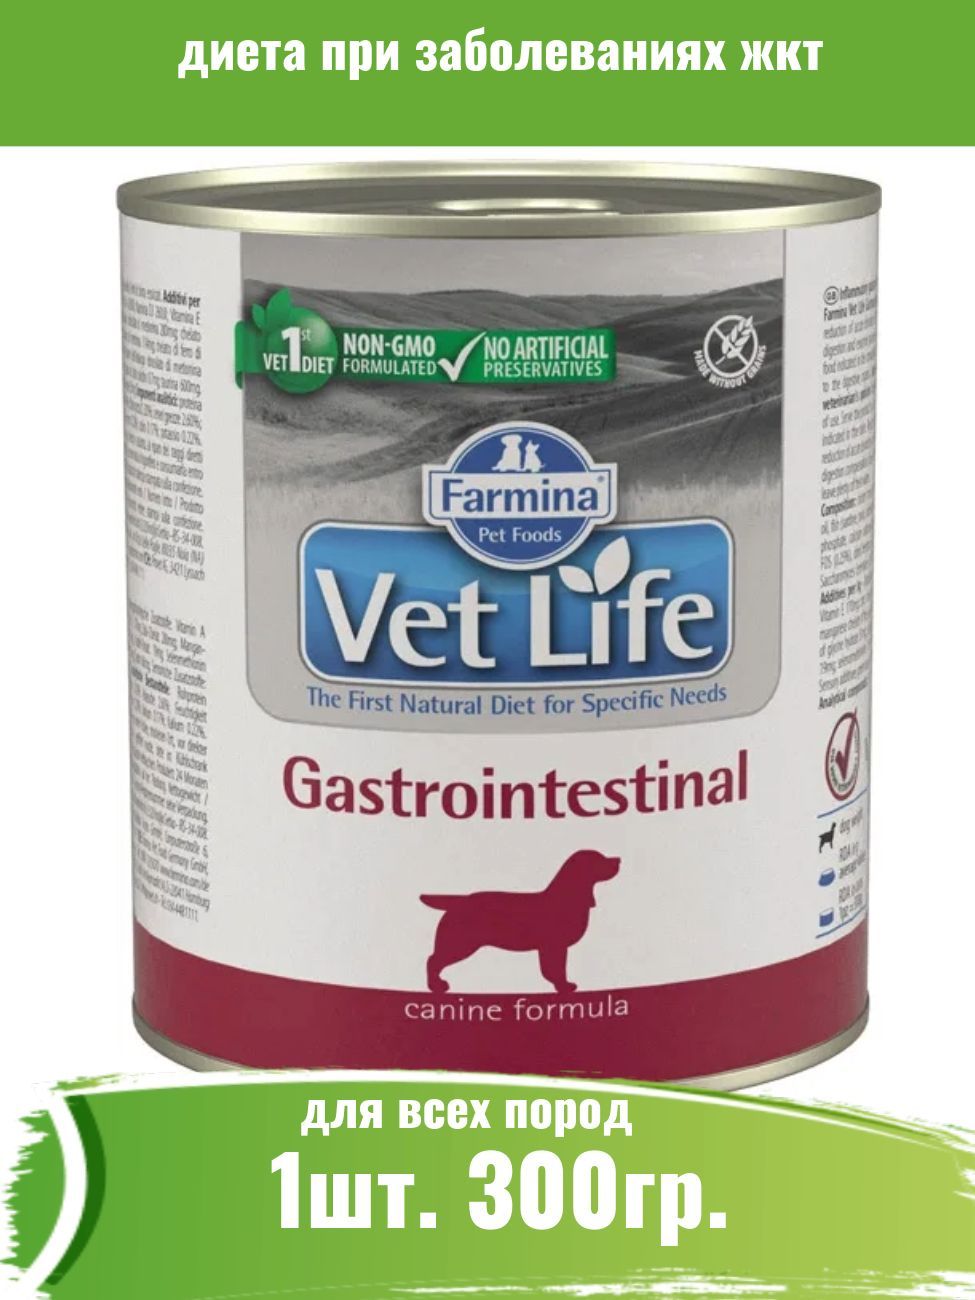 Farmina vet life gastrointestinal для собак. Фармина гастро Интестинал для собак. Хиллс гастро Интестинал для собак сухой с какими вкусами паштет.